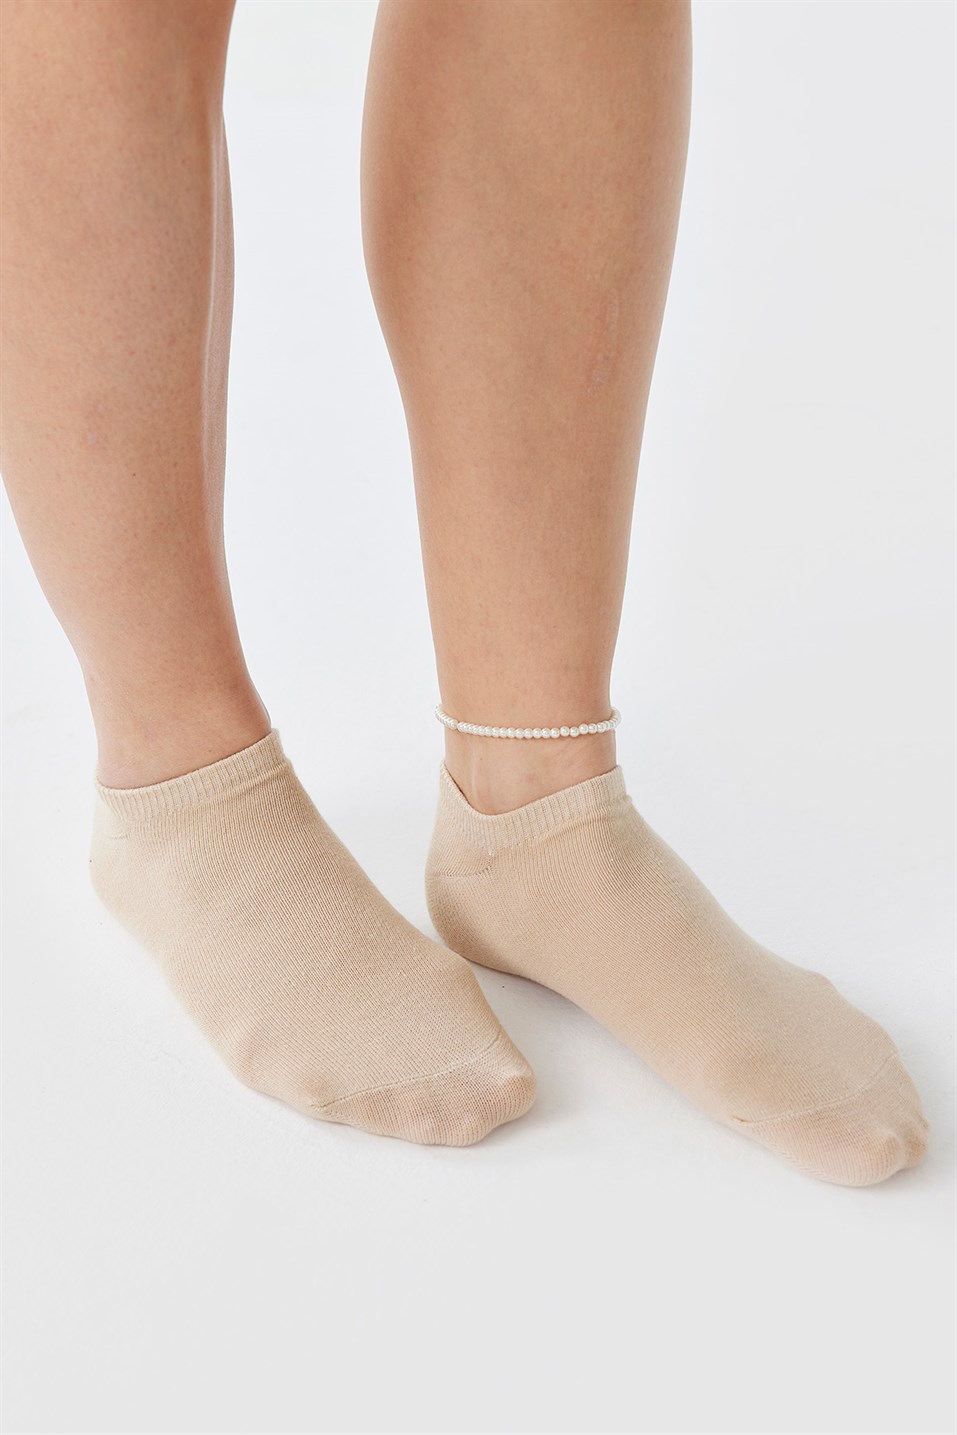 Beige Cotton Thin Booties Socks